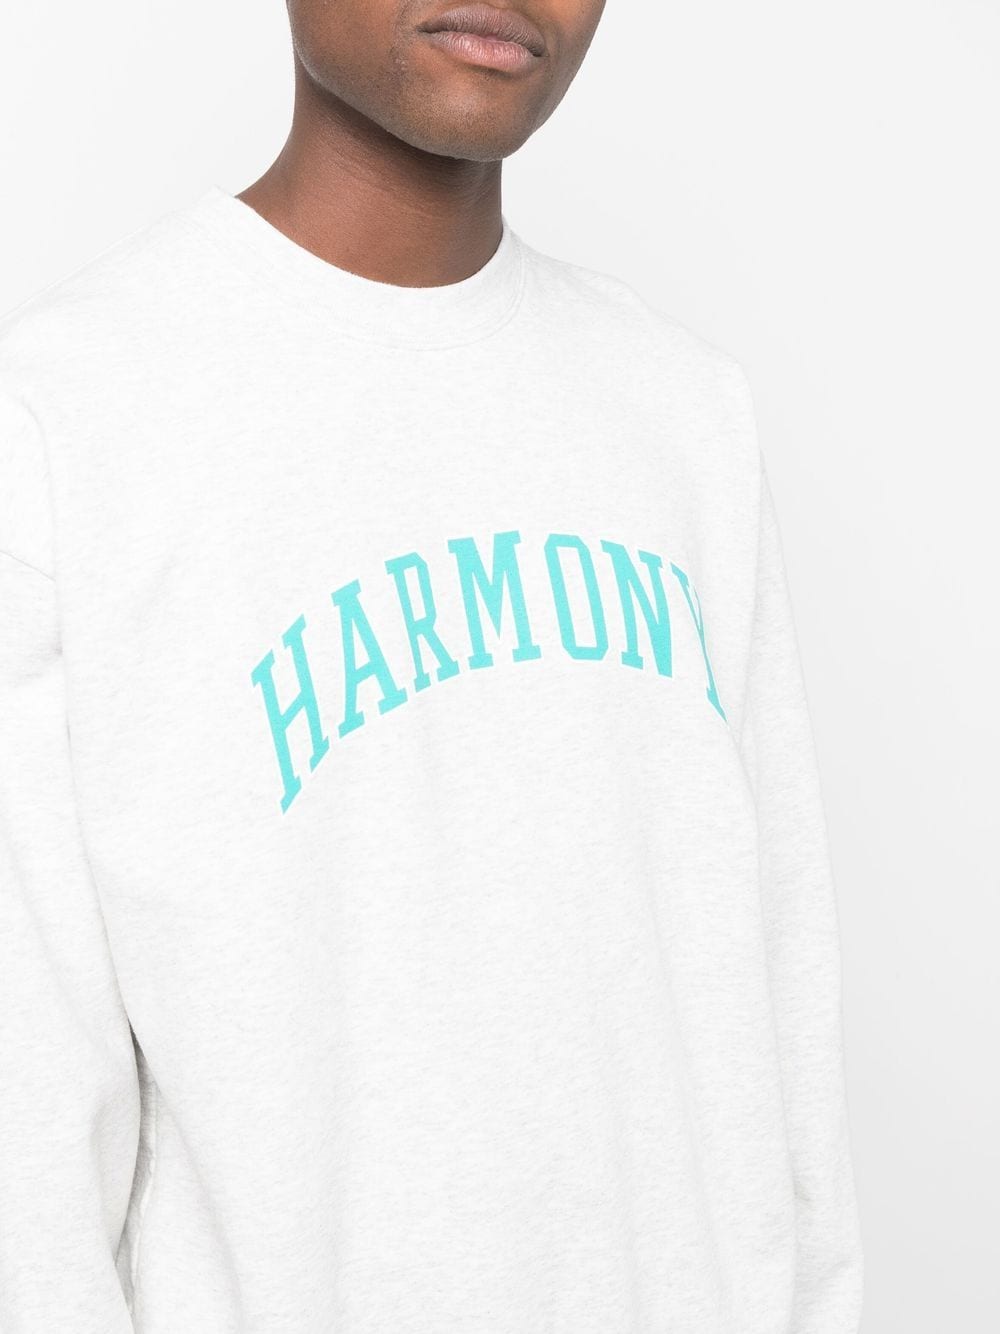 Off-white/aqua blue cotton blend logo-print sweatshirt